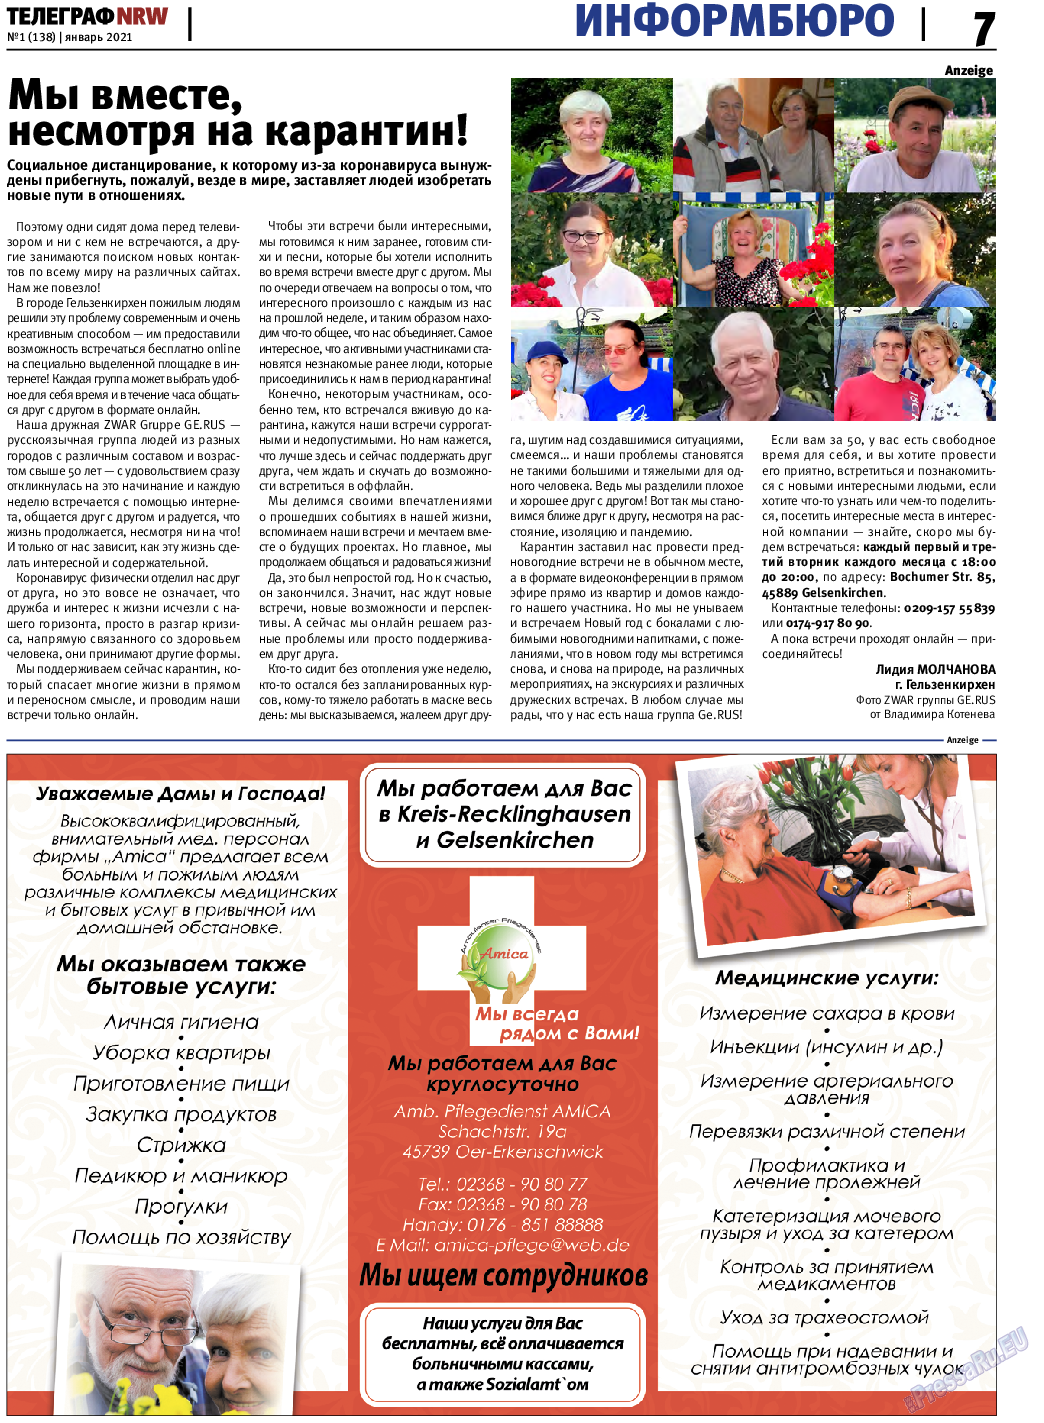 Телеграф NRW, газета. 2021 №1 стр.7